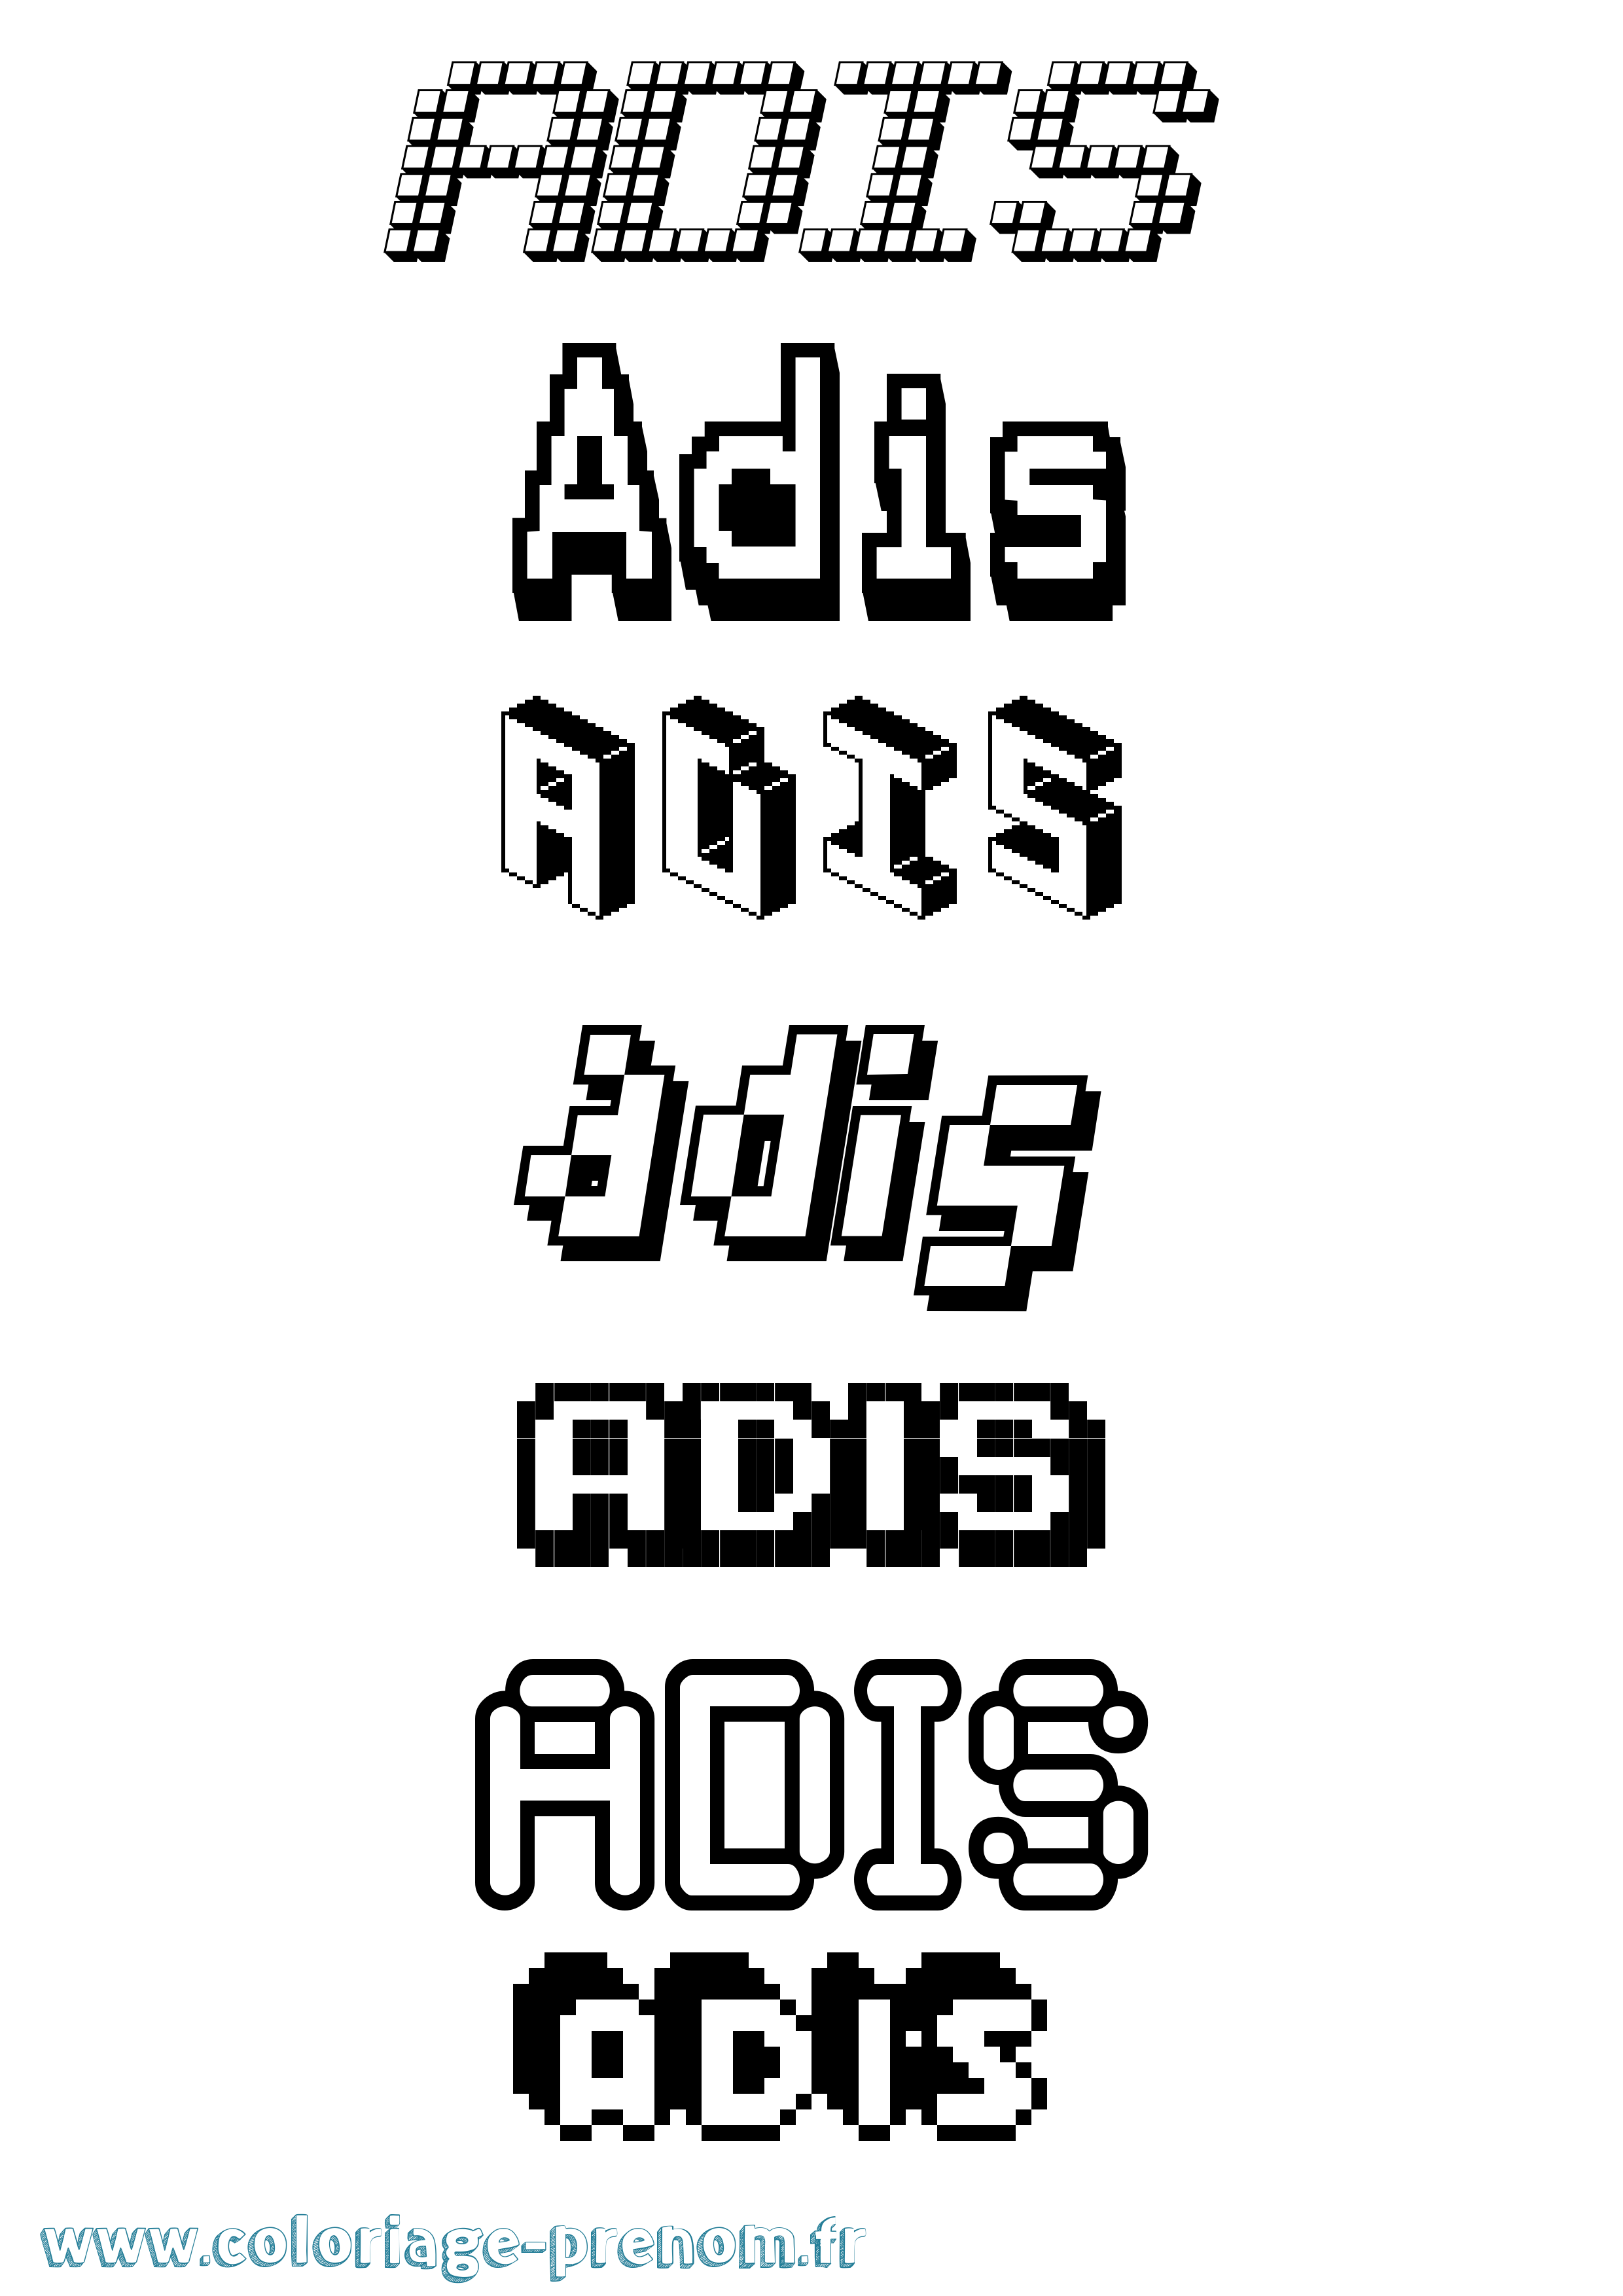 Coloriage prénom Adis Pixel